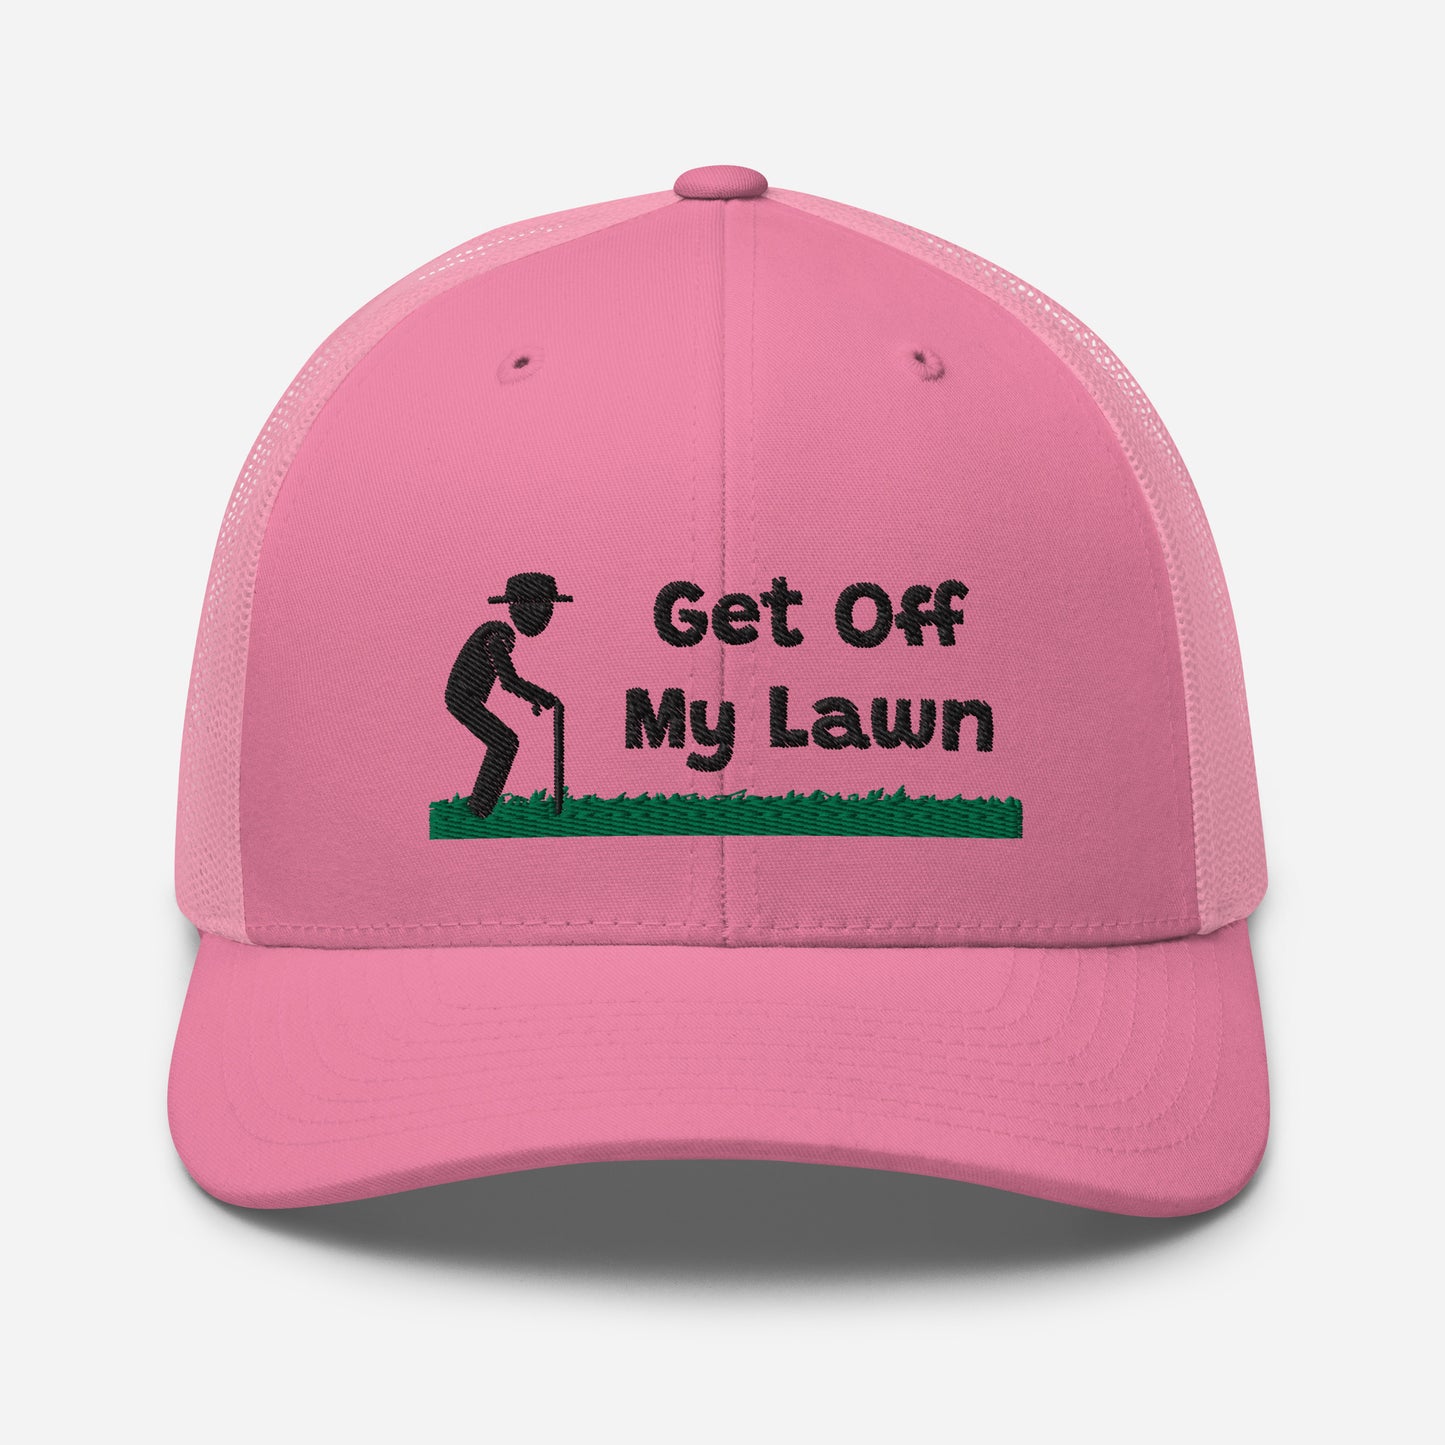 Get Off My Lawn - Trucker Cap